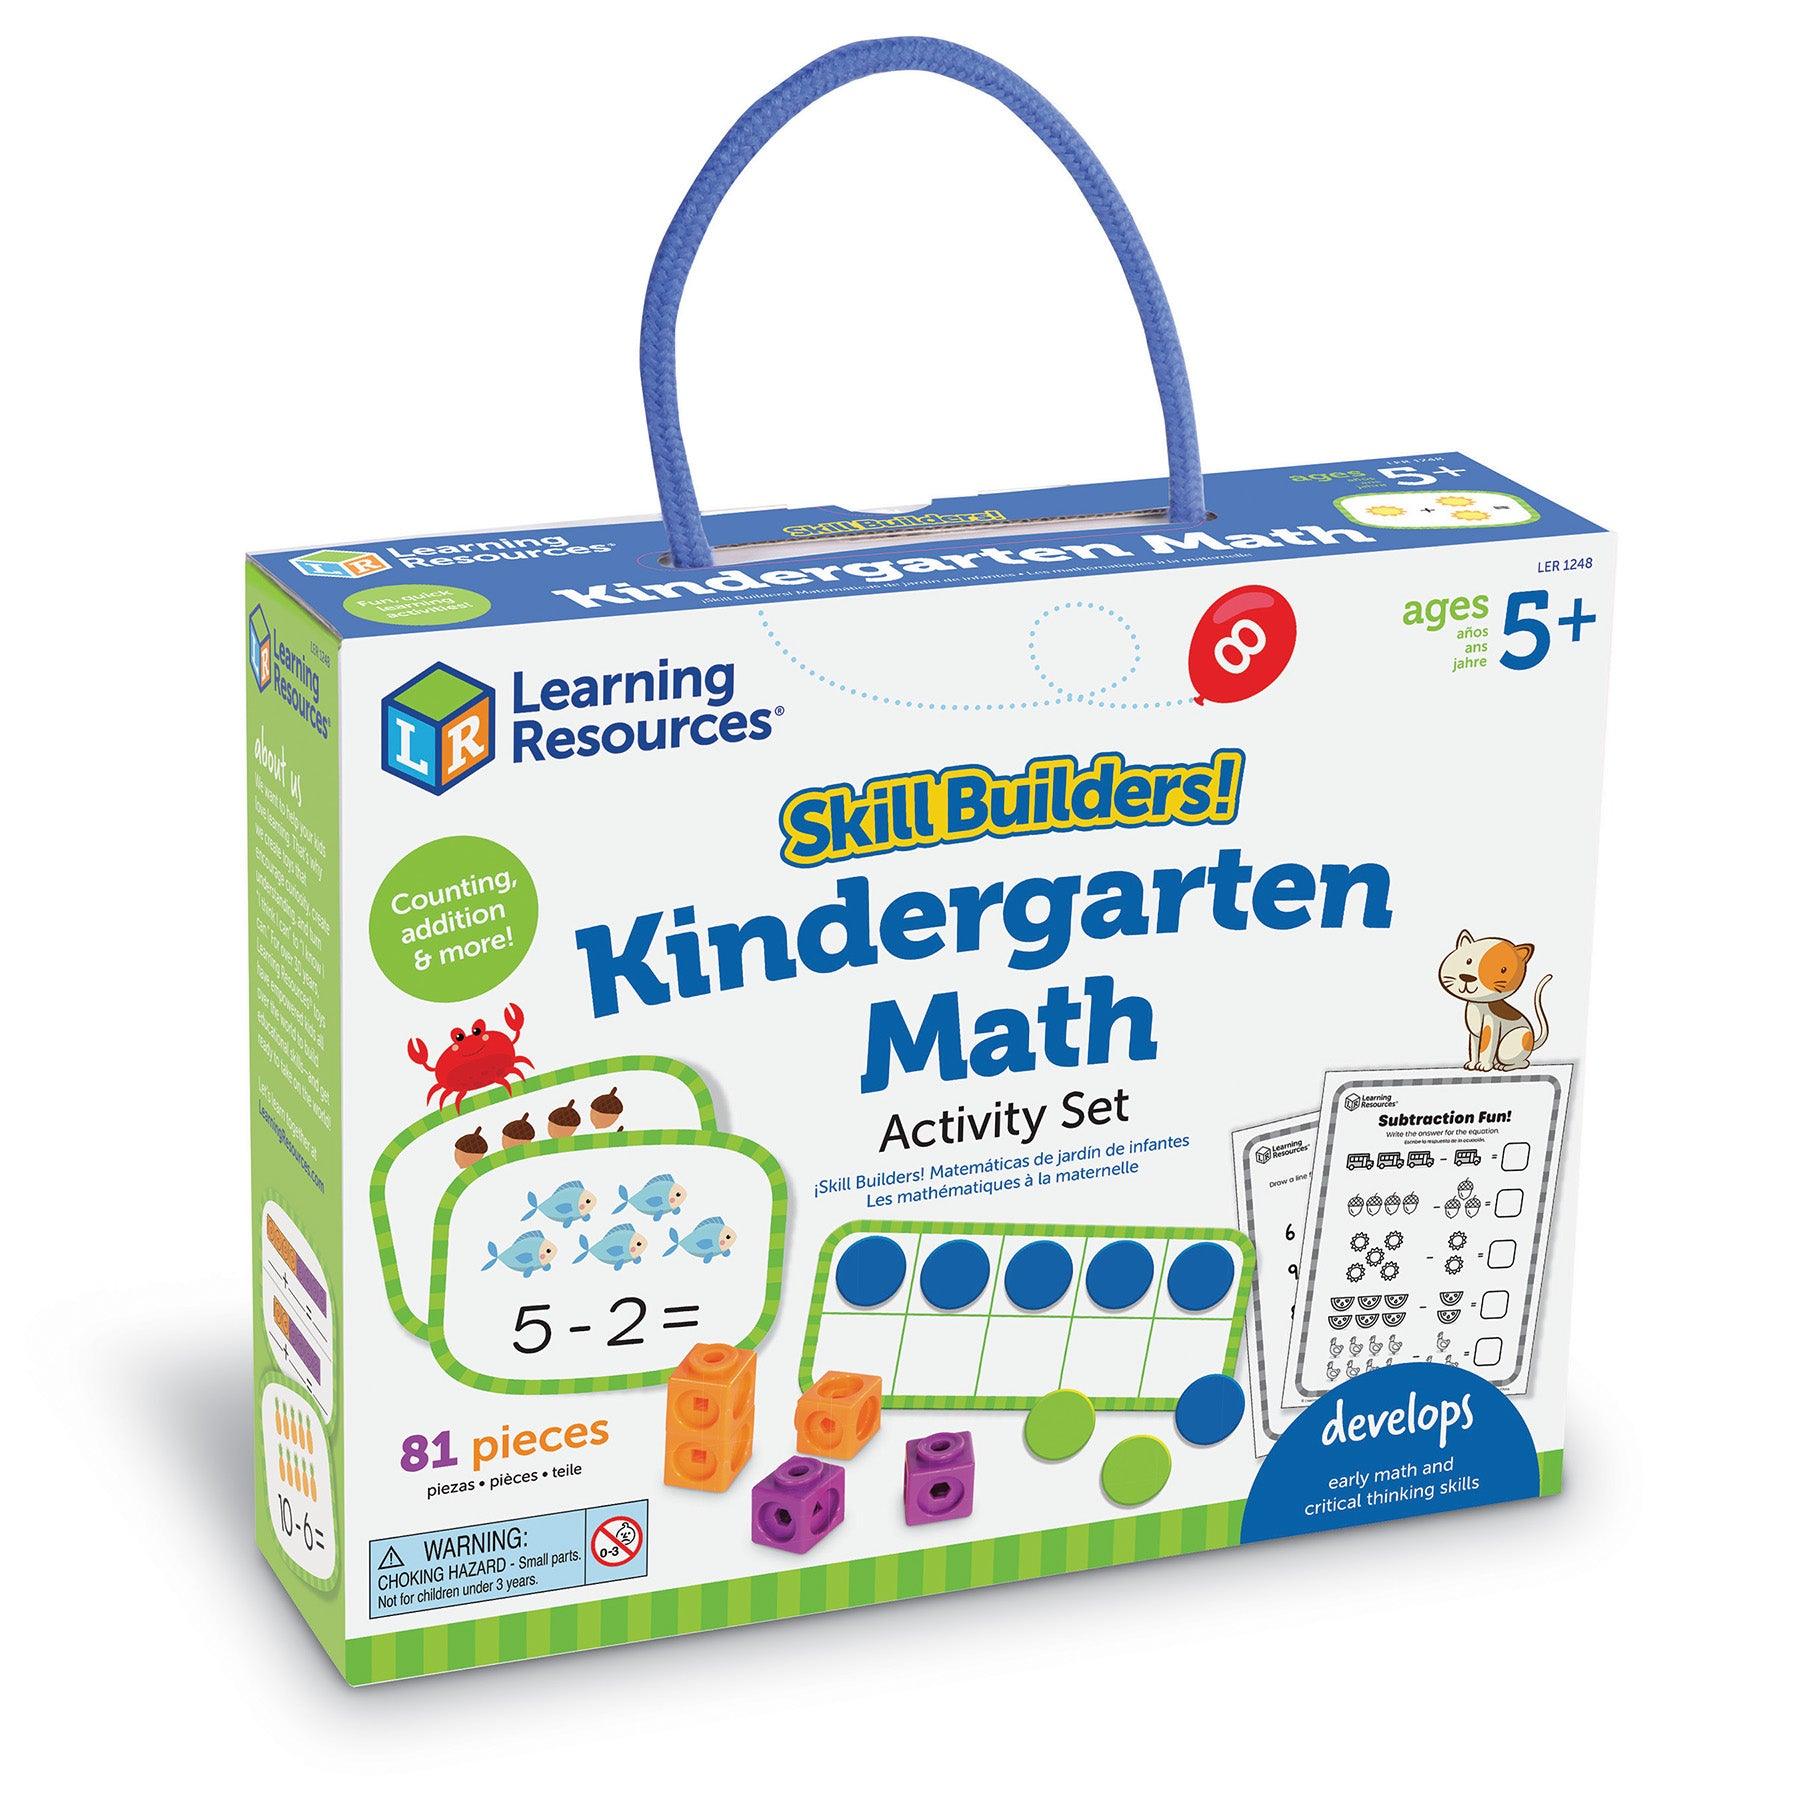 Skill Builders! Kindergarten Math - Loomini